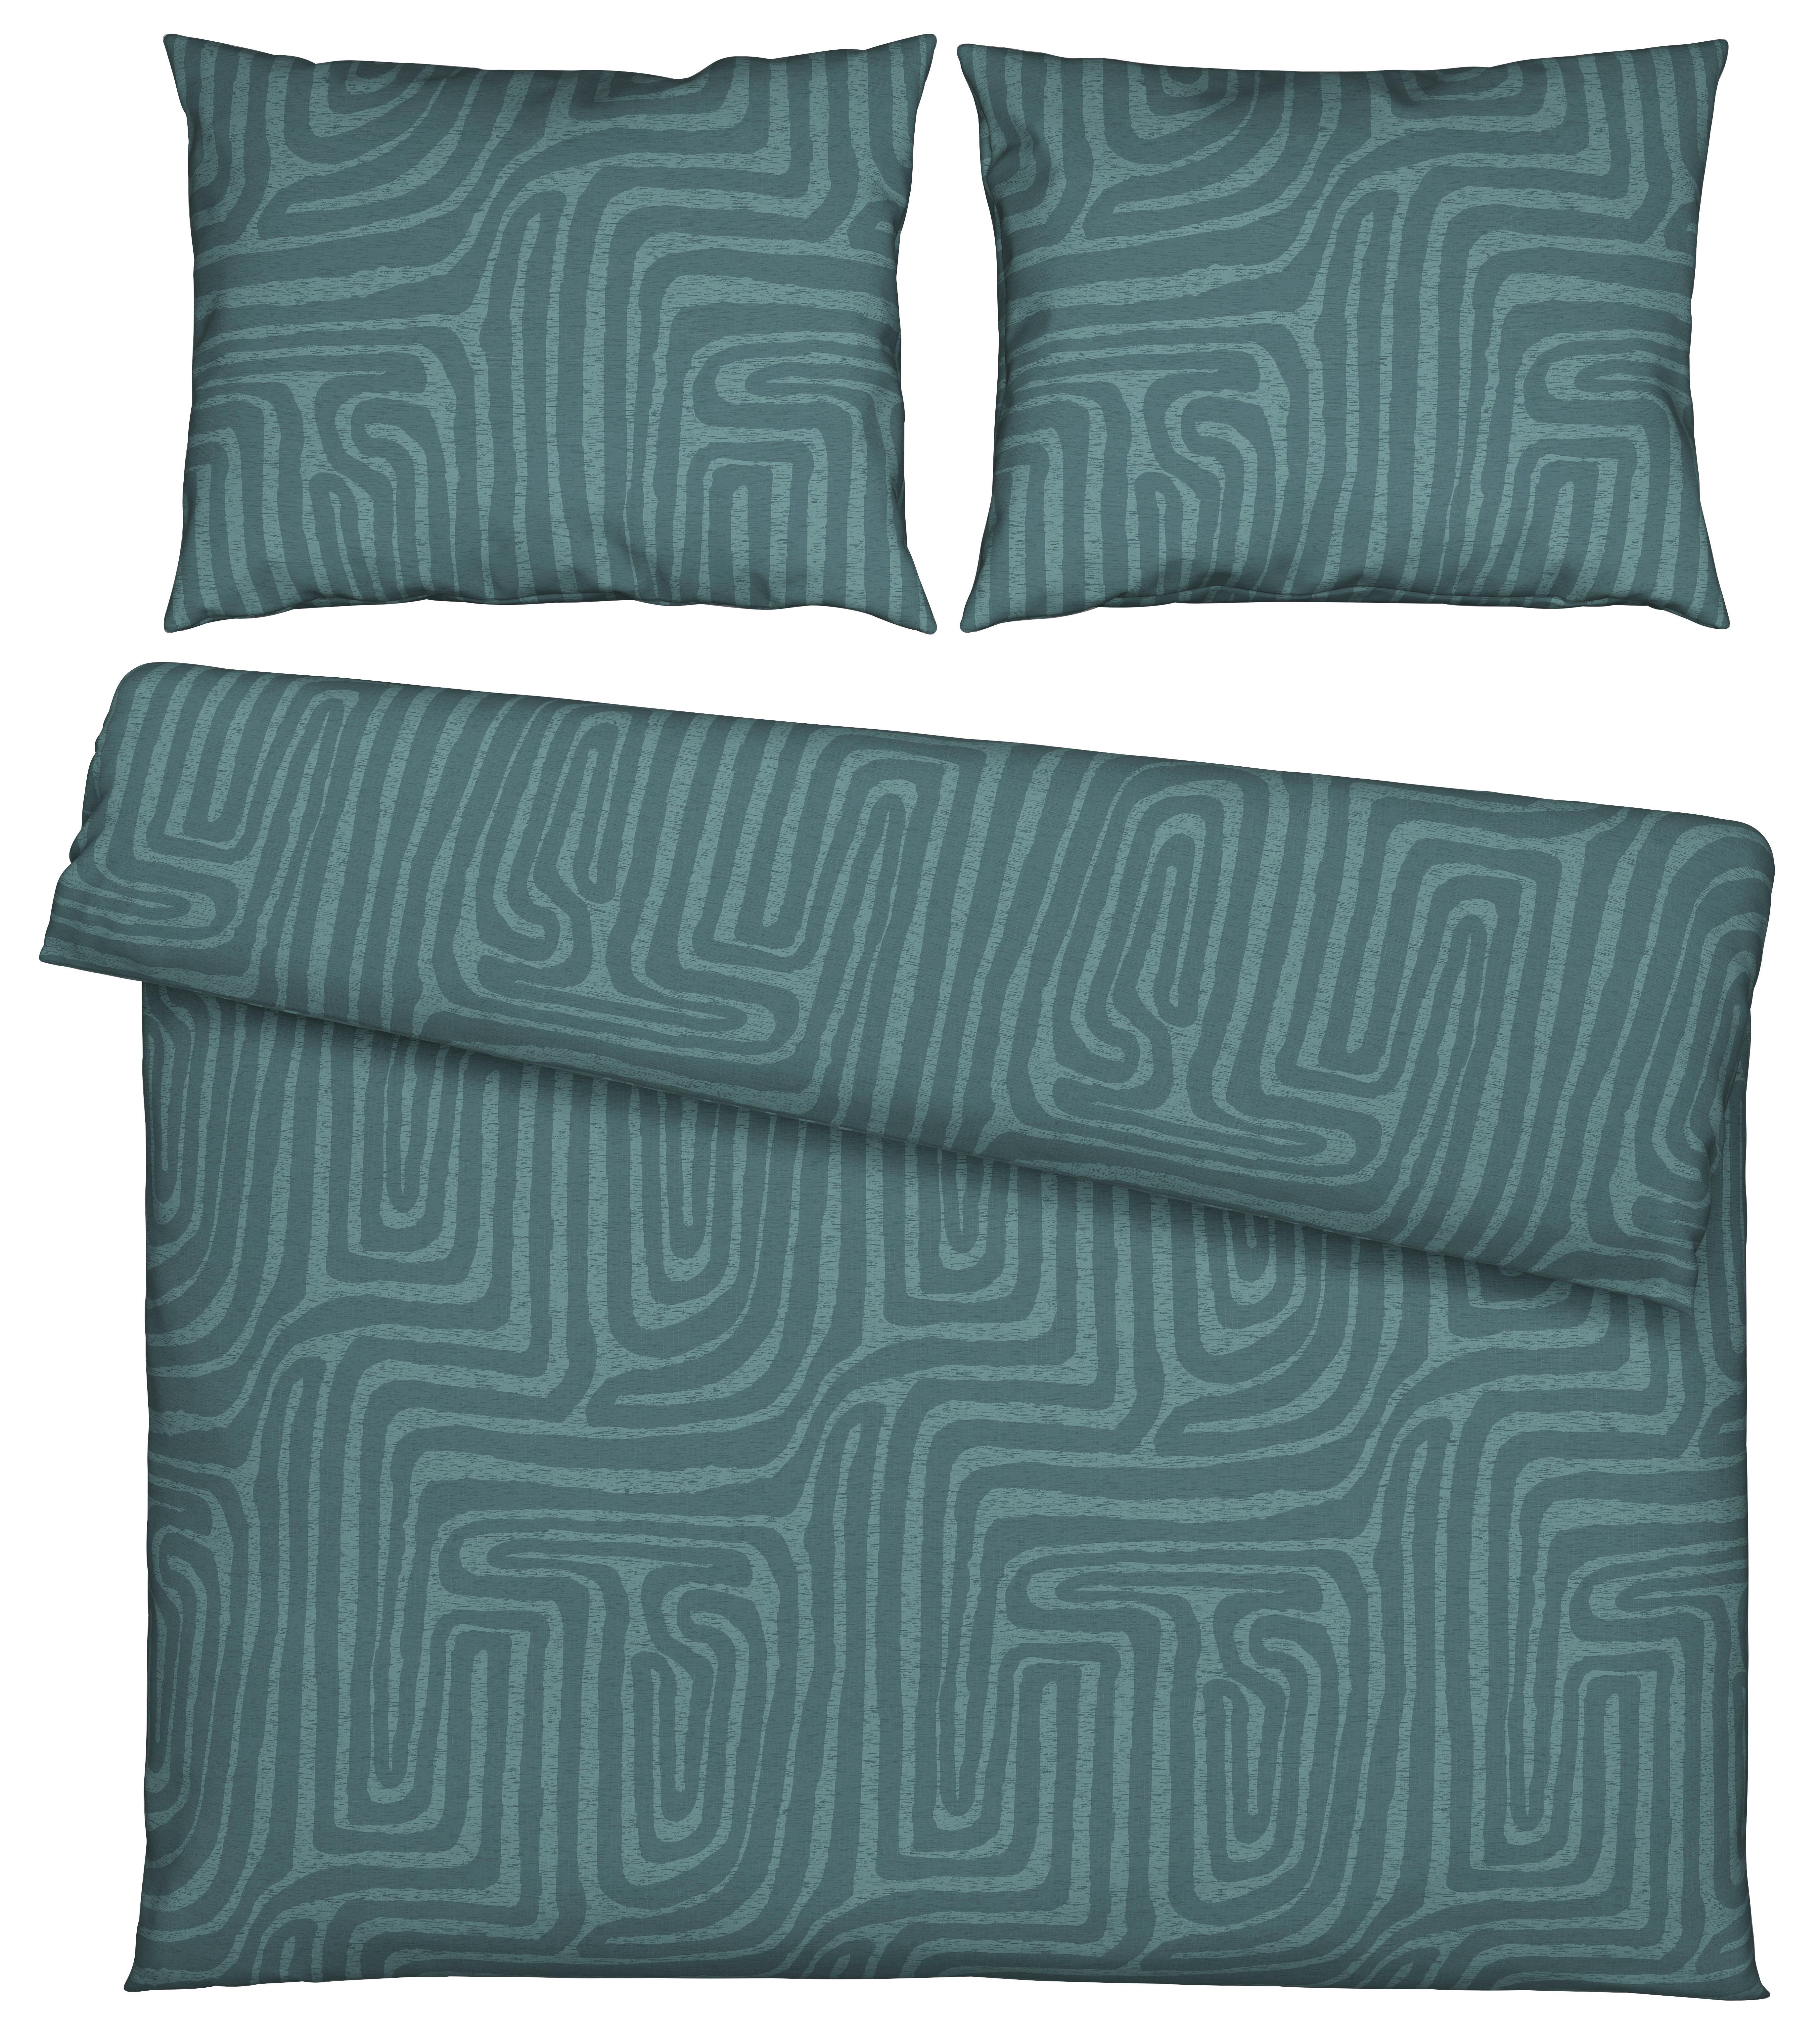 Posteljina Liam Xxl 2x70/90cm 200/220cm - zelena, Modern, tekstil (200/200cm) - Modern Living